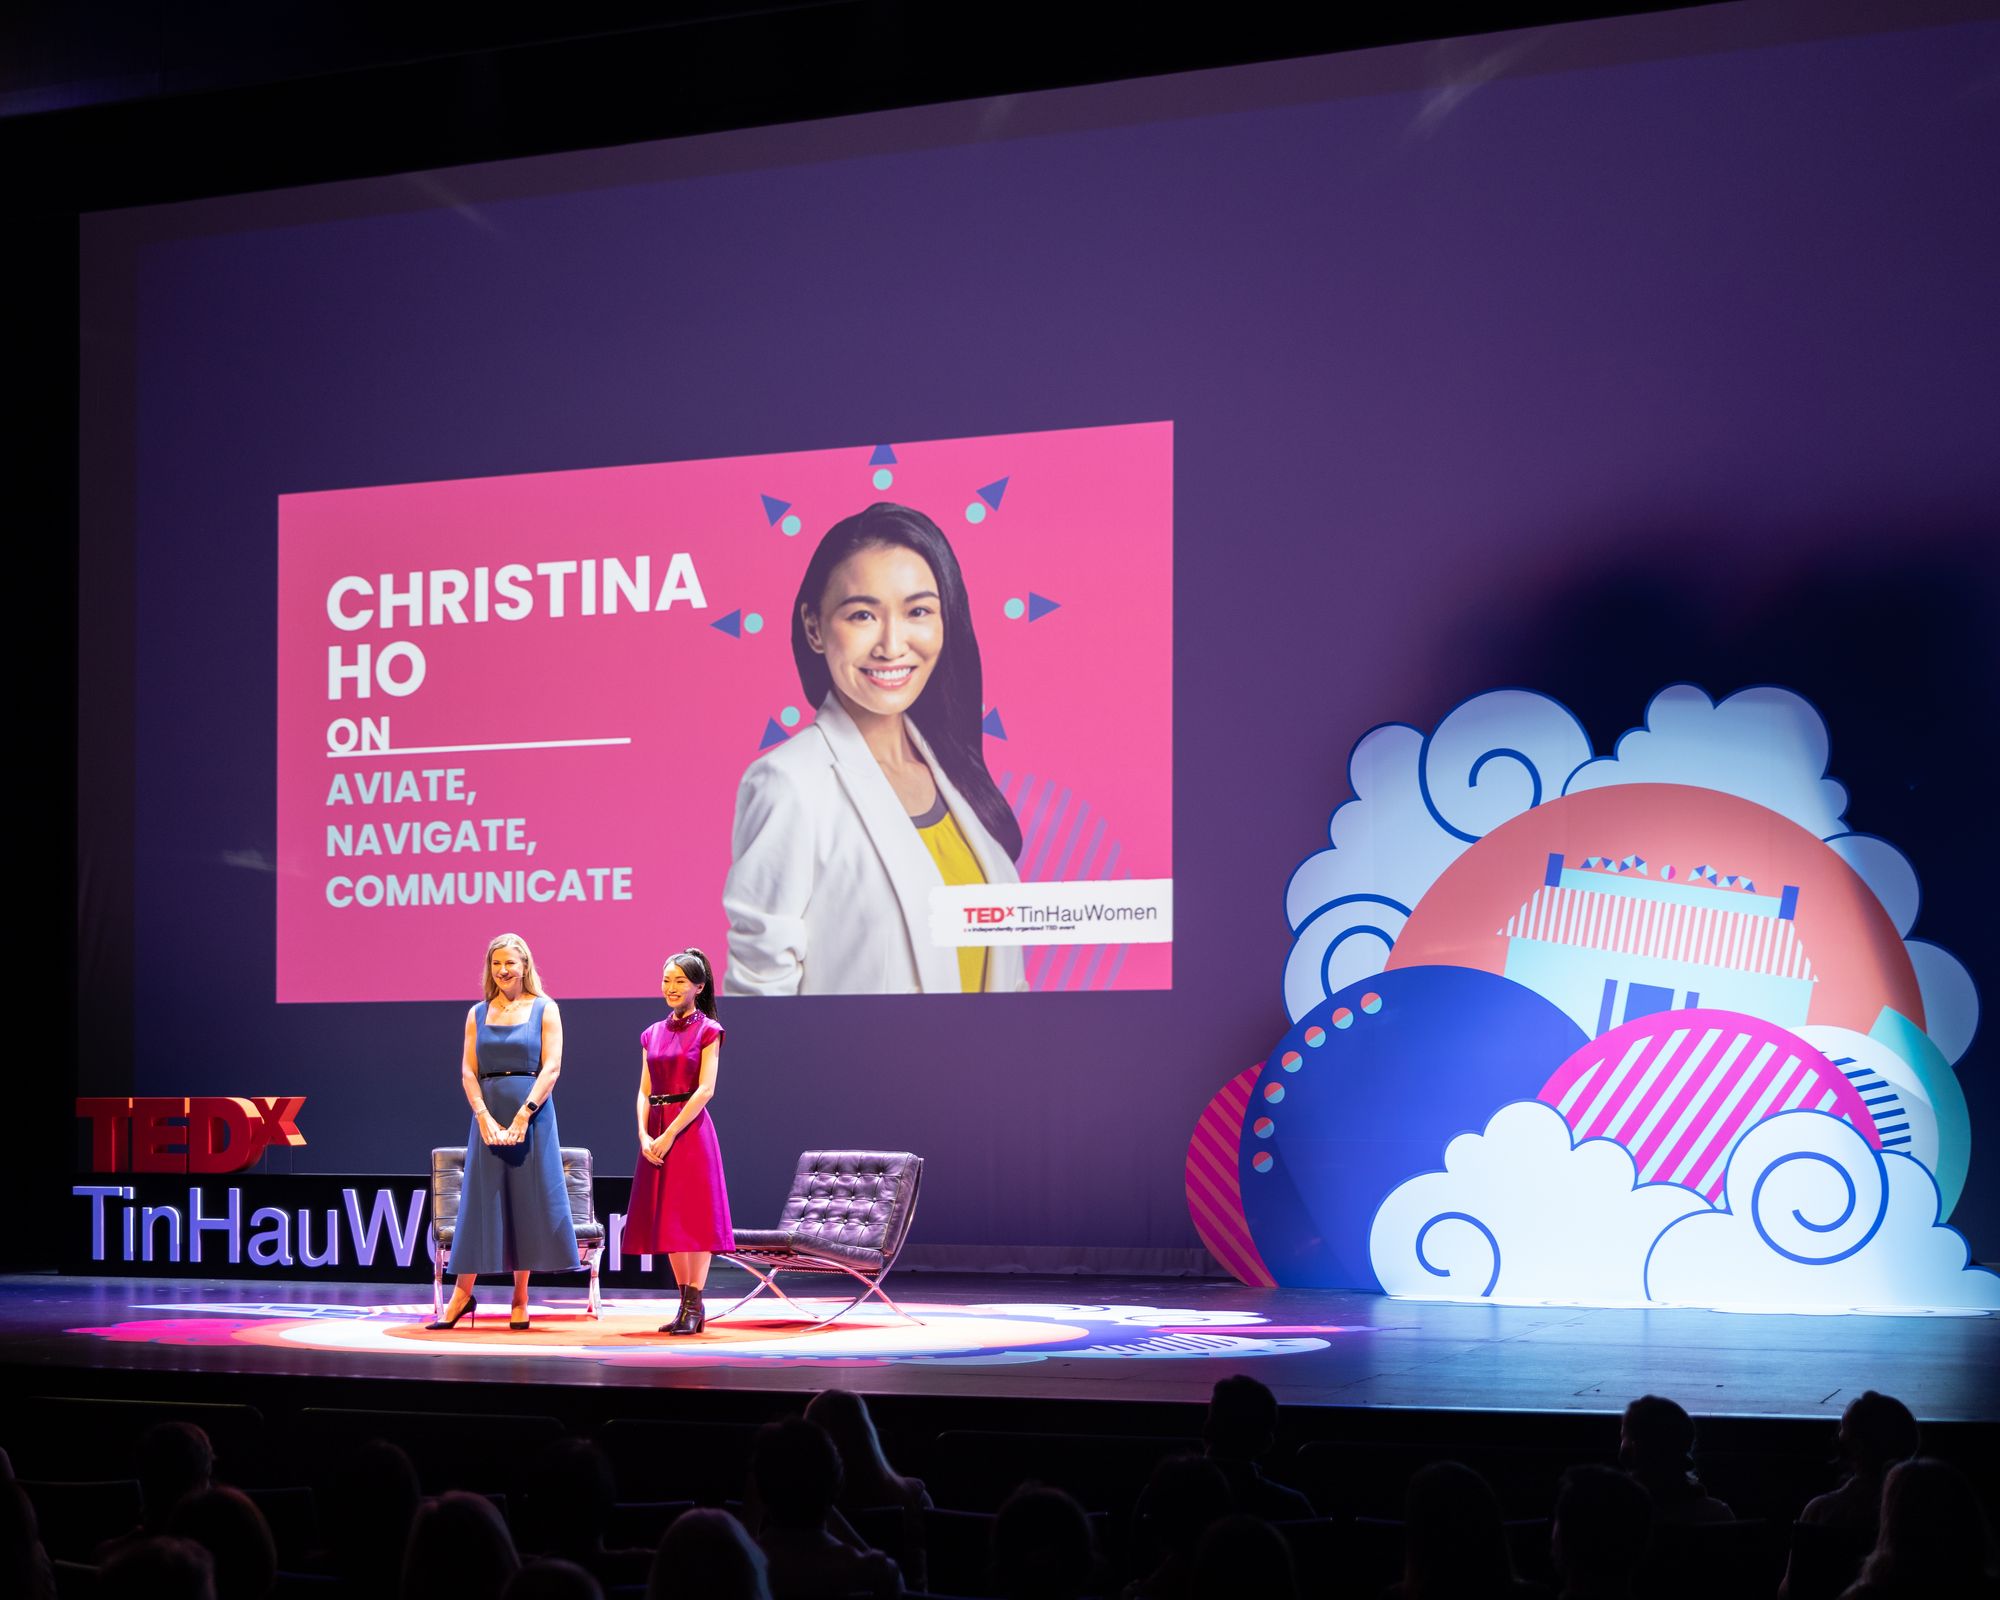 Christina Ho at the TedxTinHauWomen Ted Talk